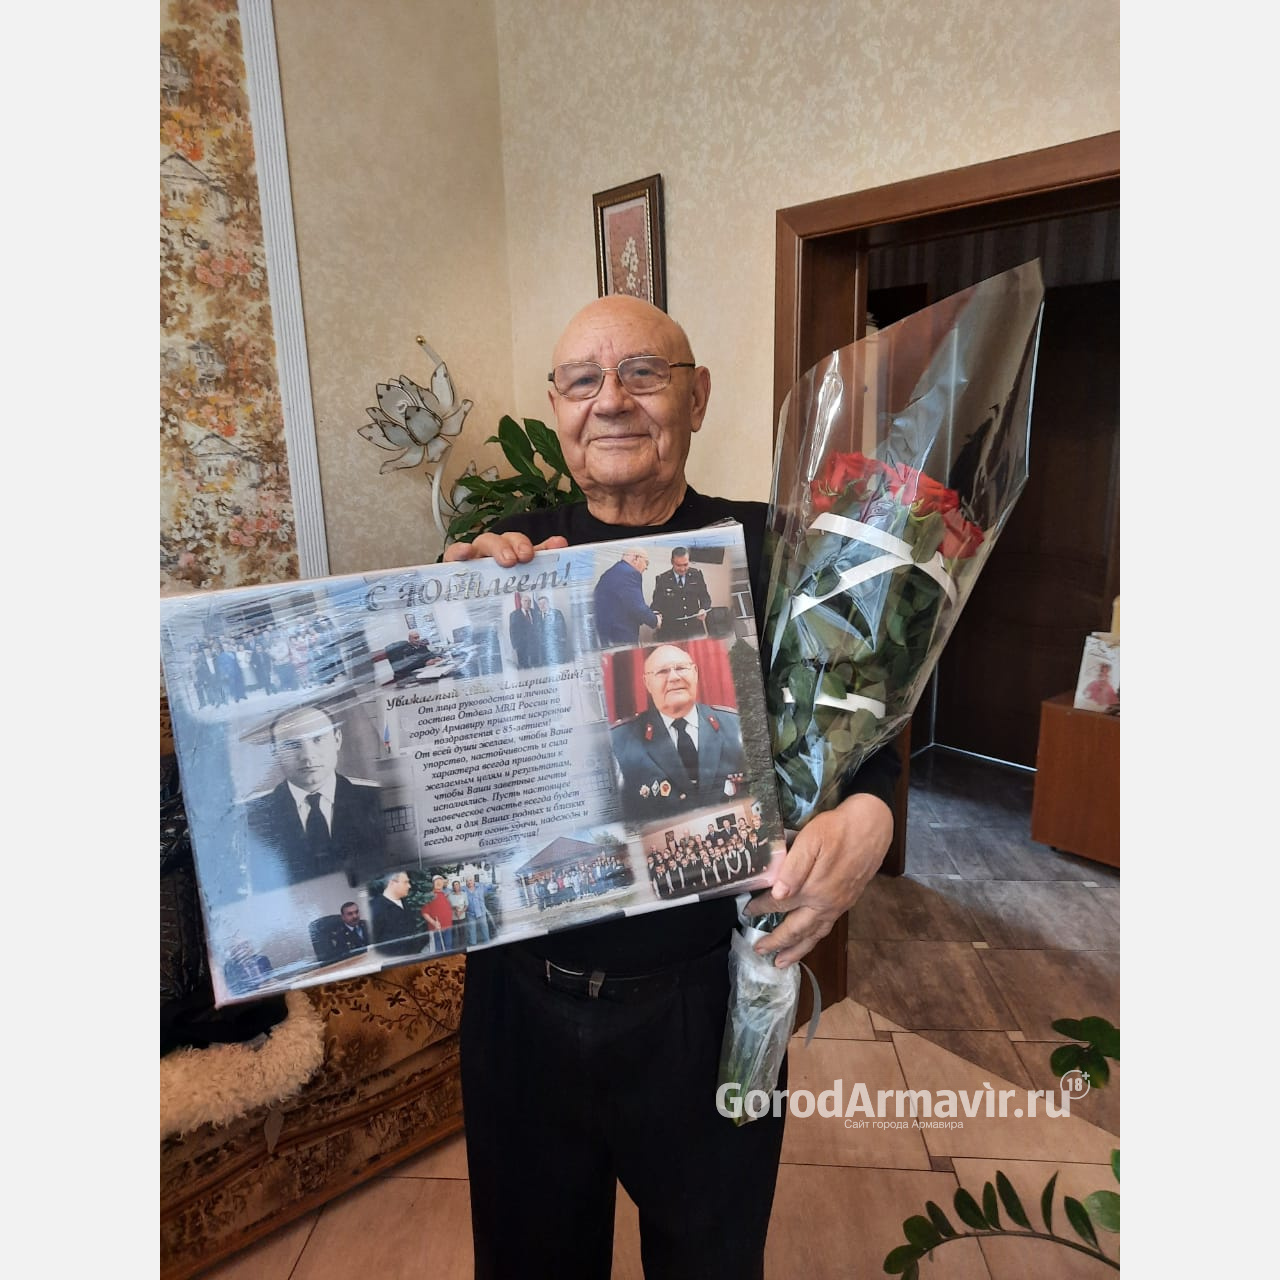 Сотрудники полиции поздравили Председателя ветеранской организации Армавира с 85-летним юбилеем